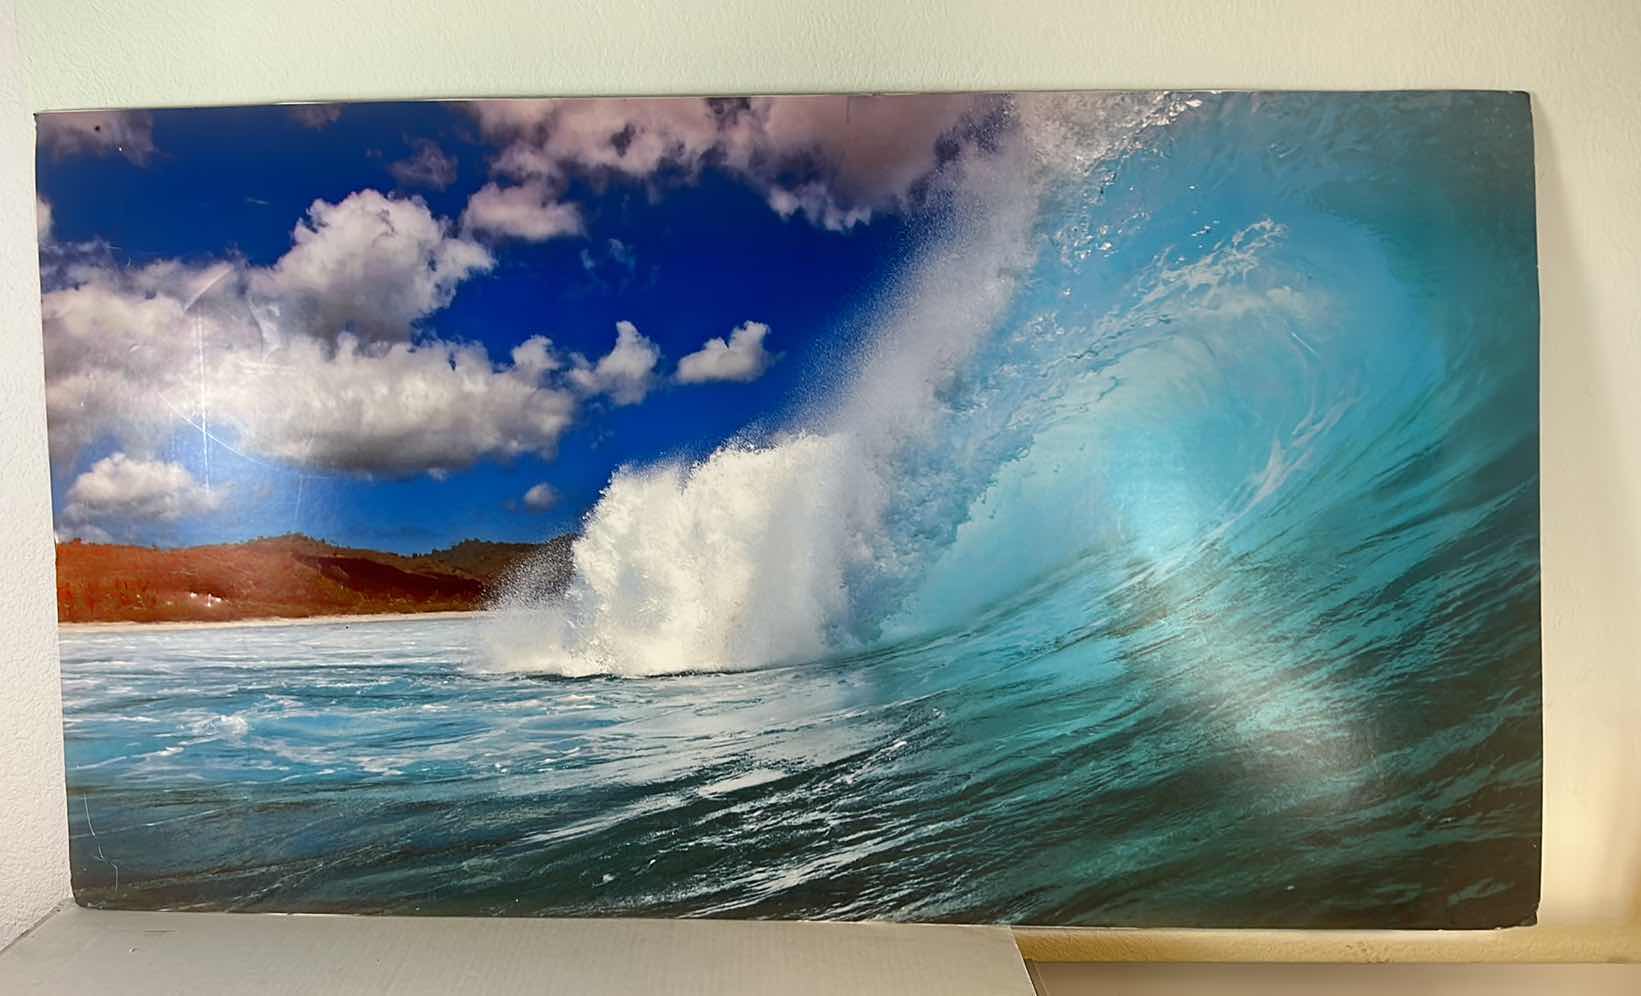 Photo 3 of WAVE CRASHING POSTER BOARD ARTWORK UNFRAMED 54“ x 30“